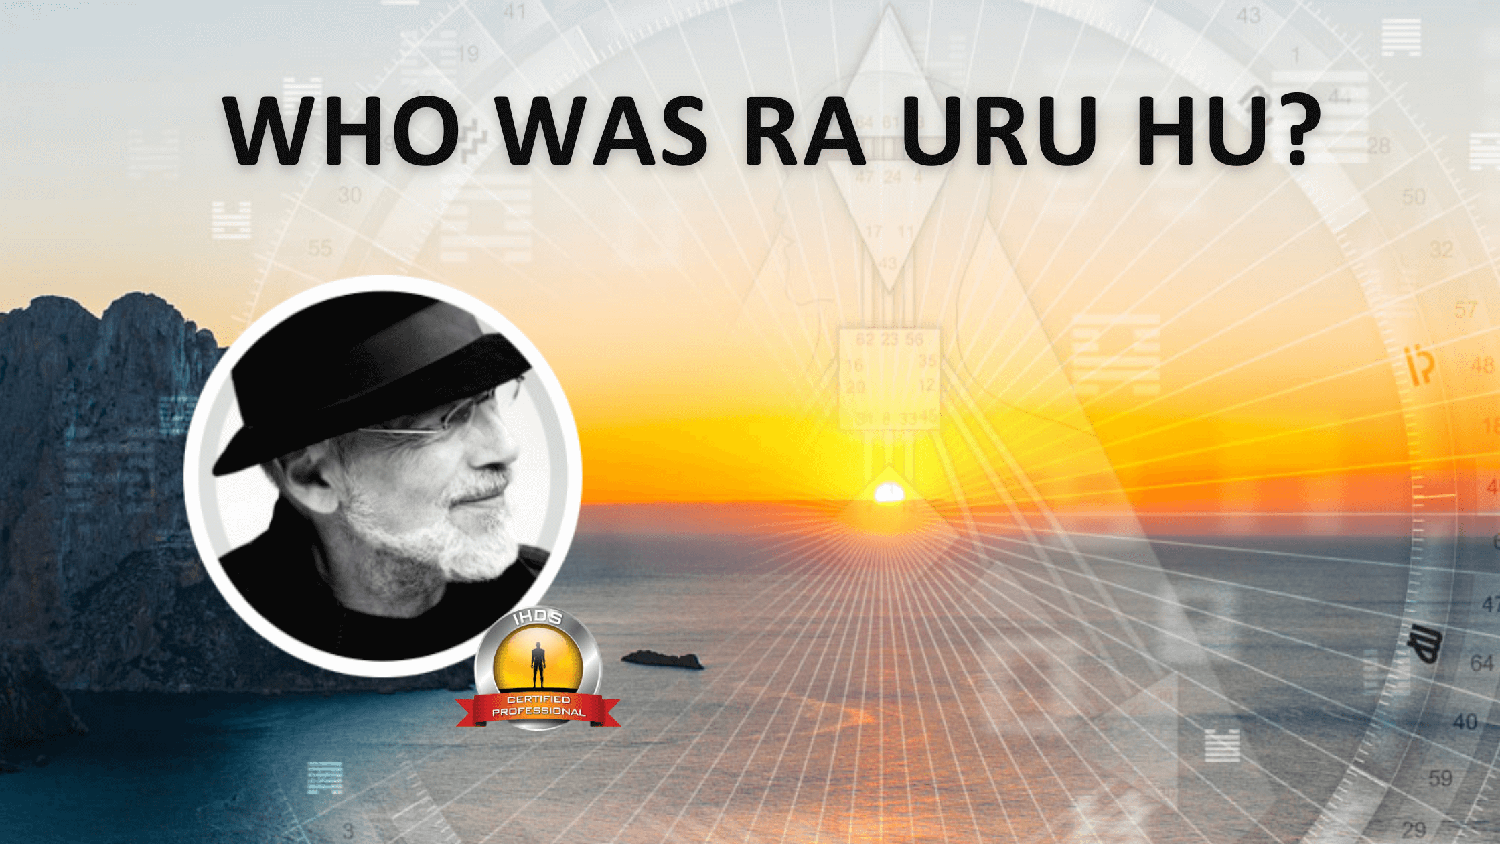 Who Is Ra Uru Hu in the Human Design System?